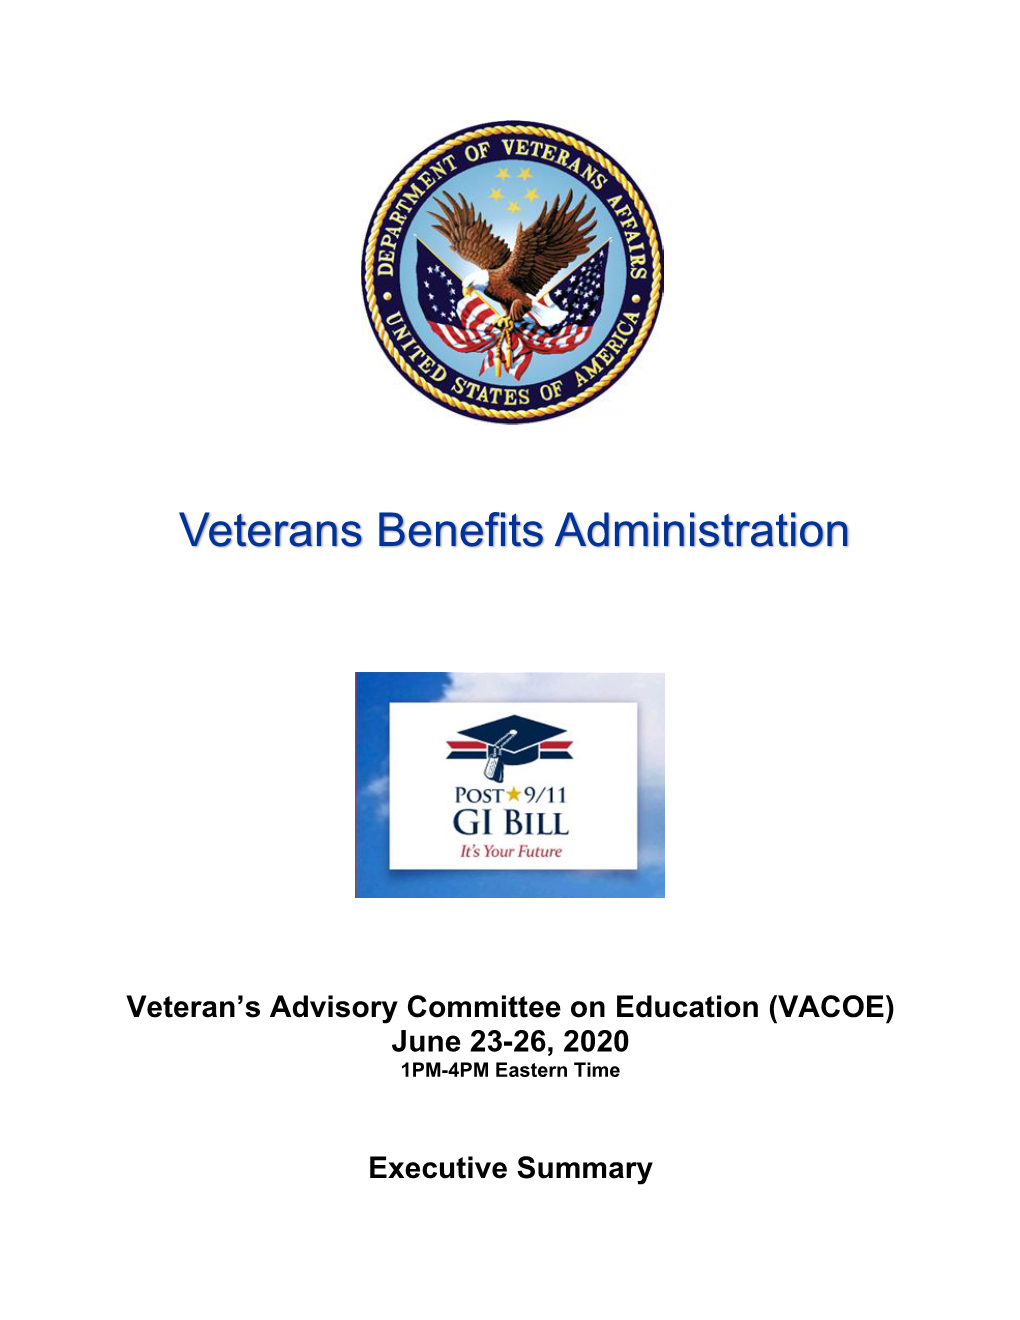 Veterans Benefits Administration VACOE Members Present